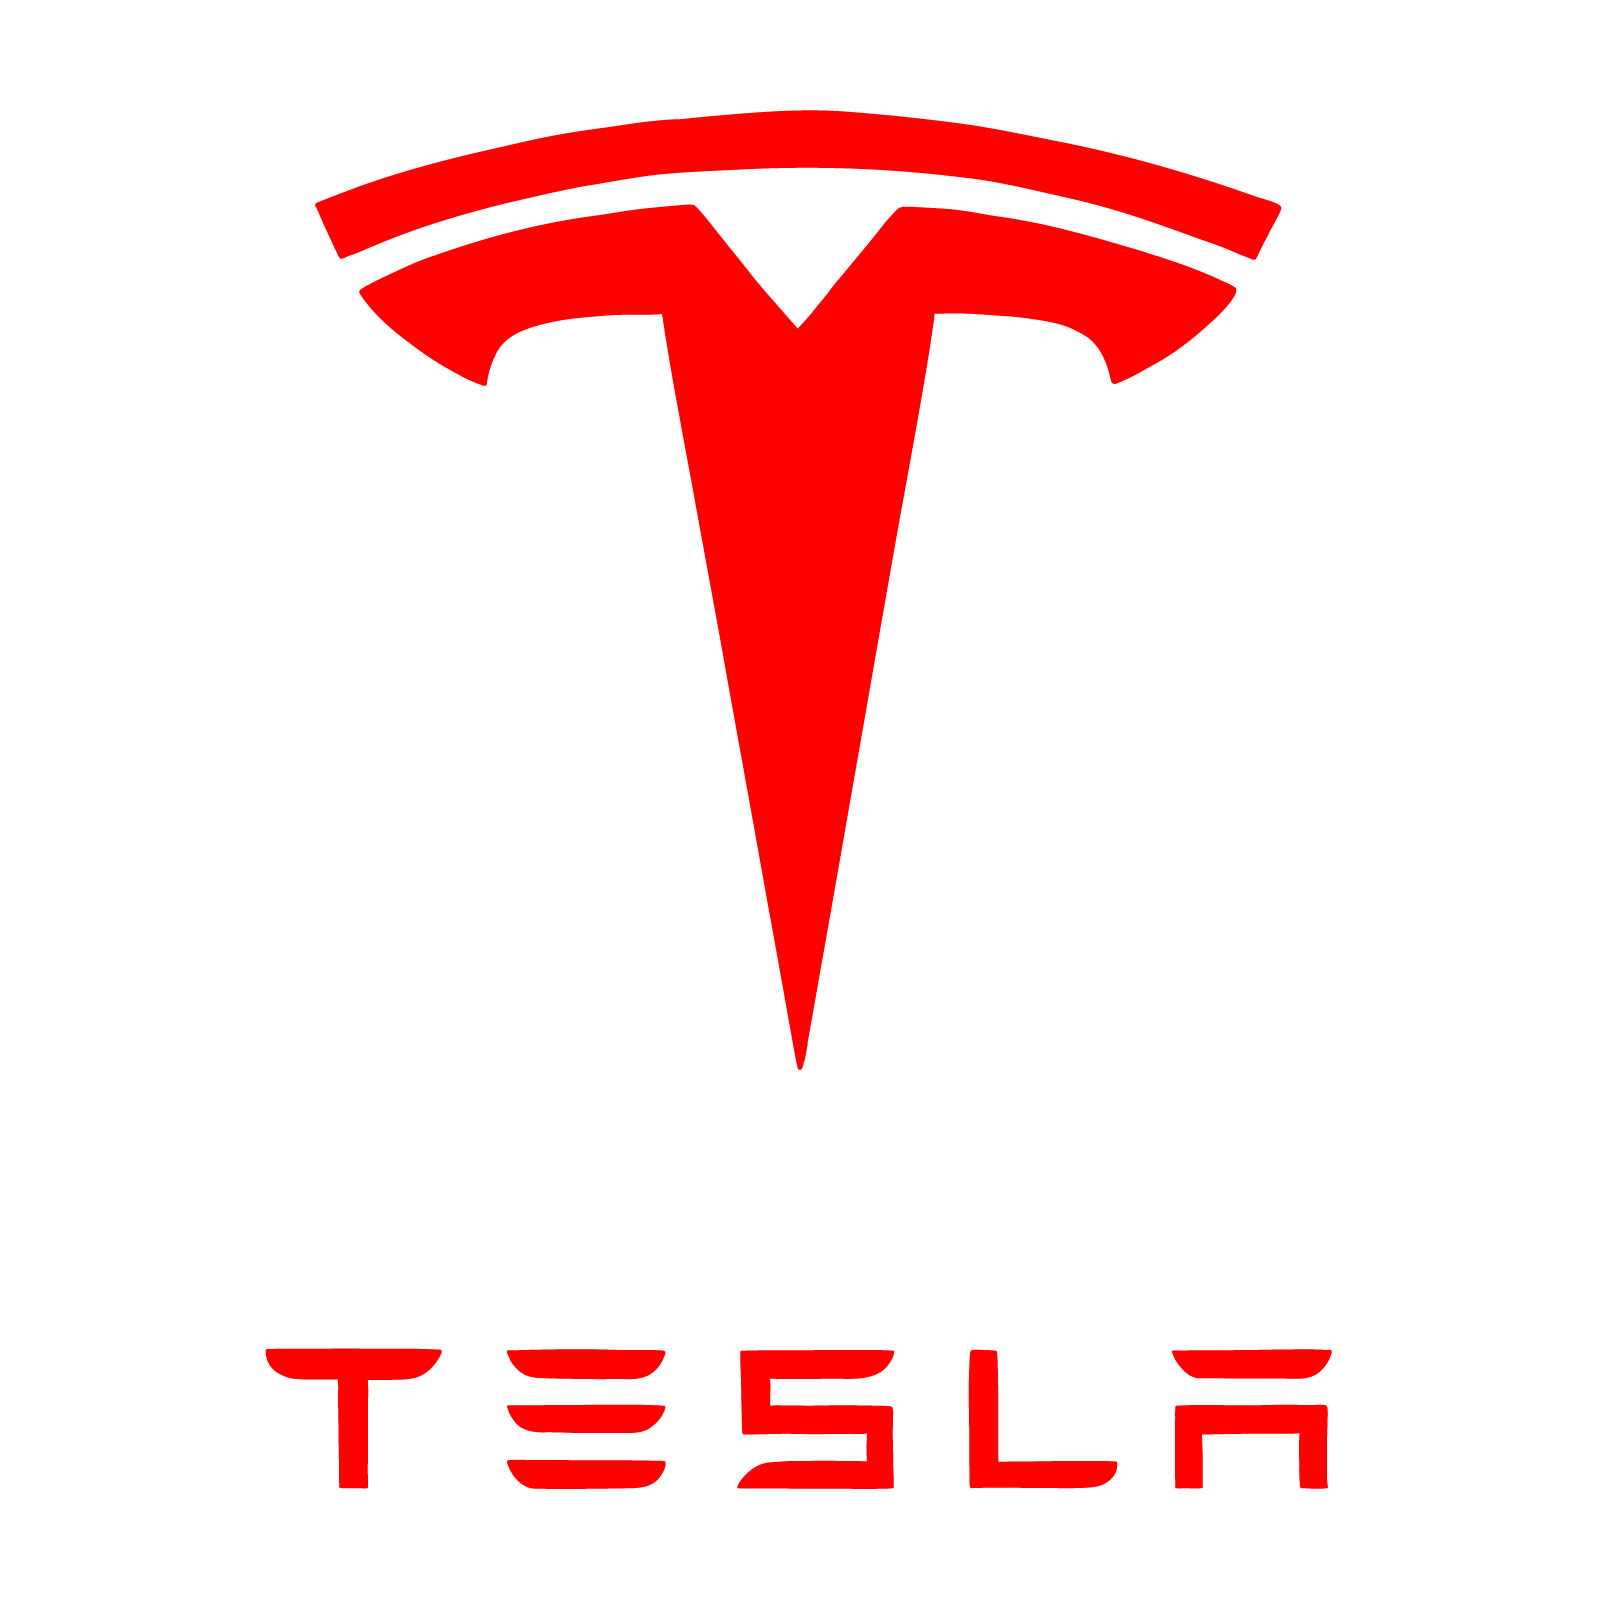 How to draw the Tesla logo - final step